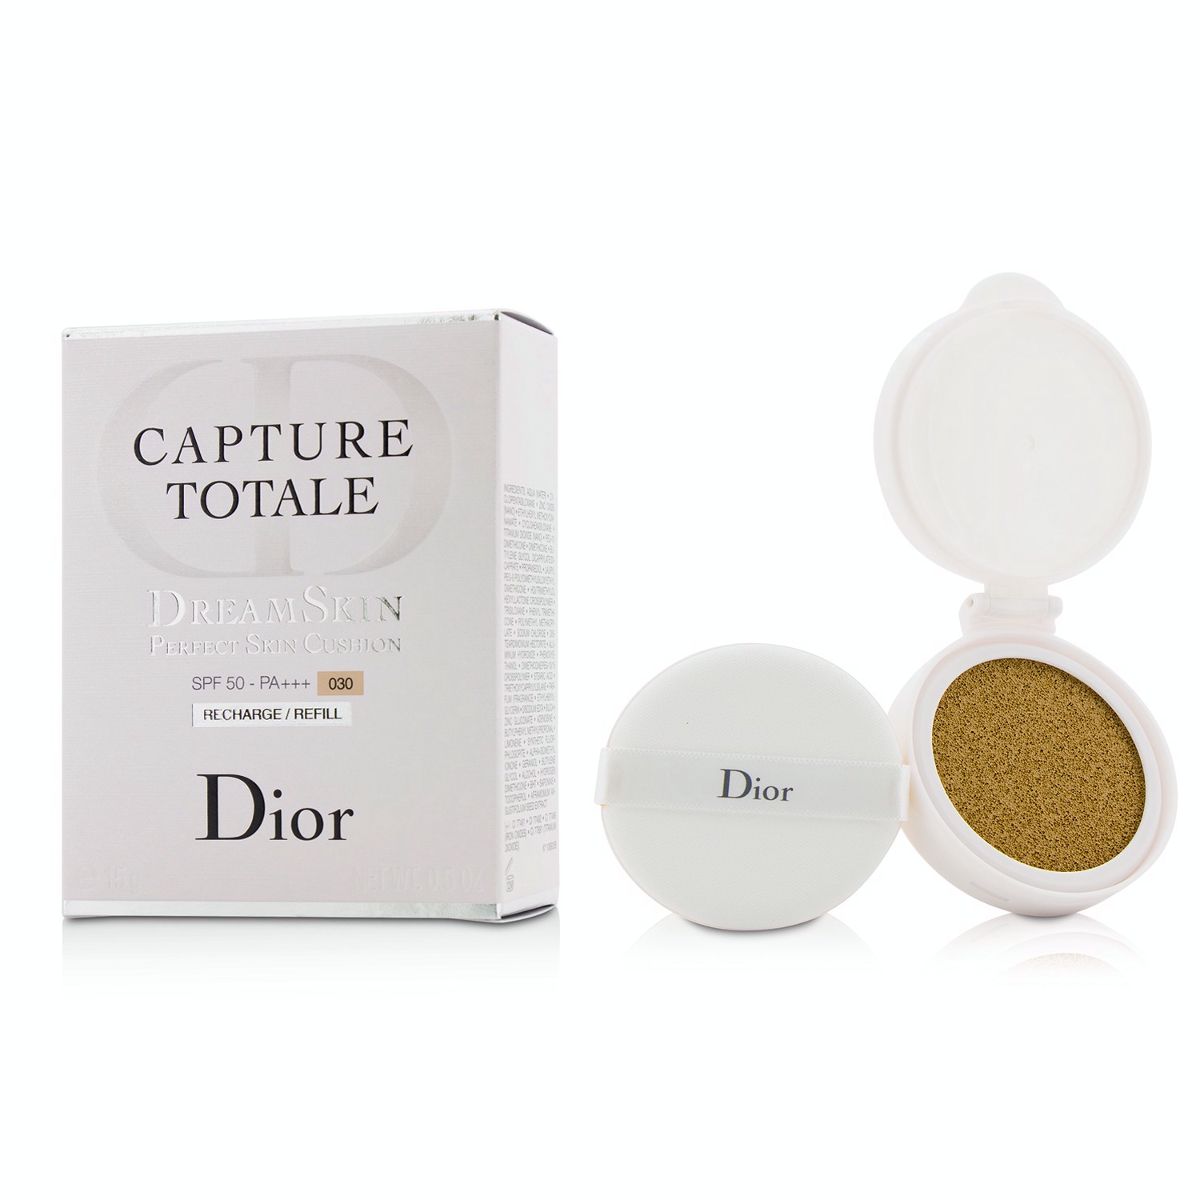 Capture Totale Dreamskin Perfect Skin Cushion SPF 50 Refill - # 030 Christian Dior Image